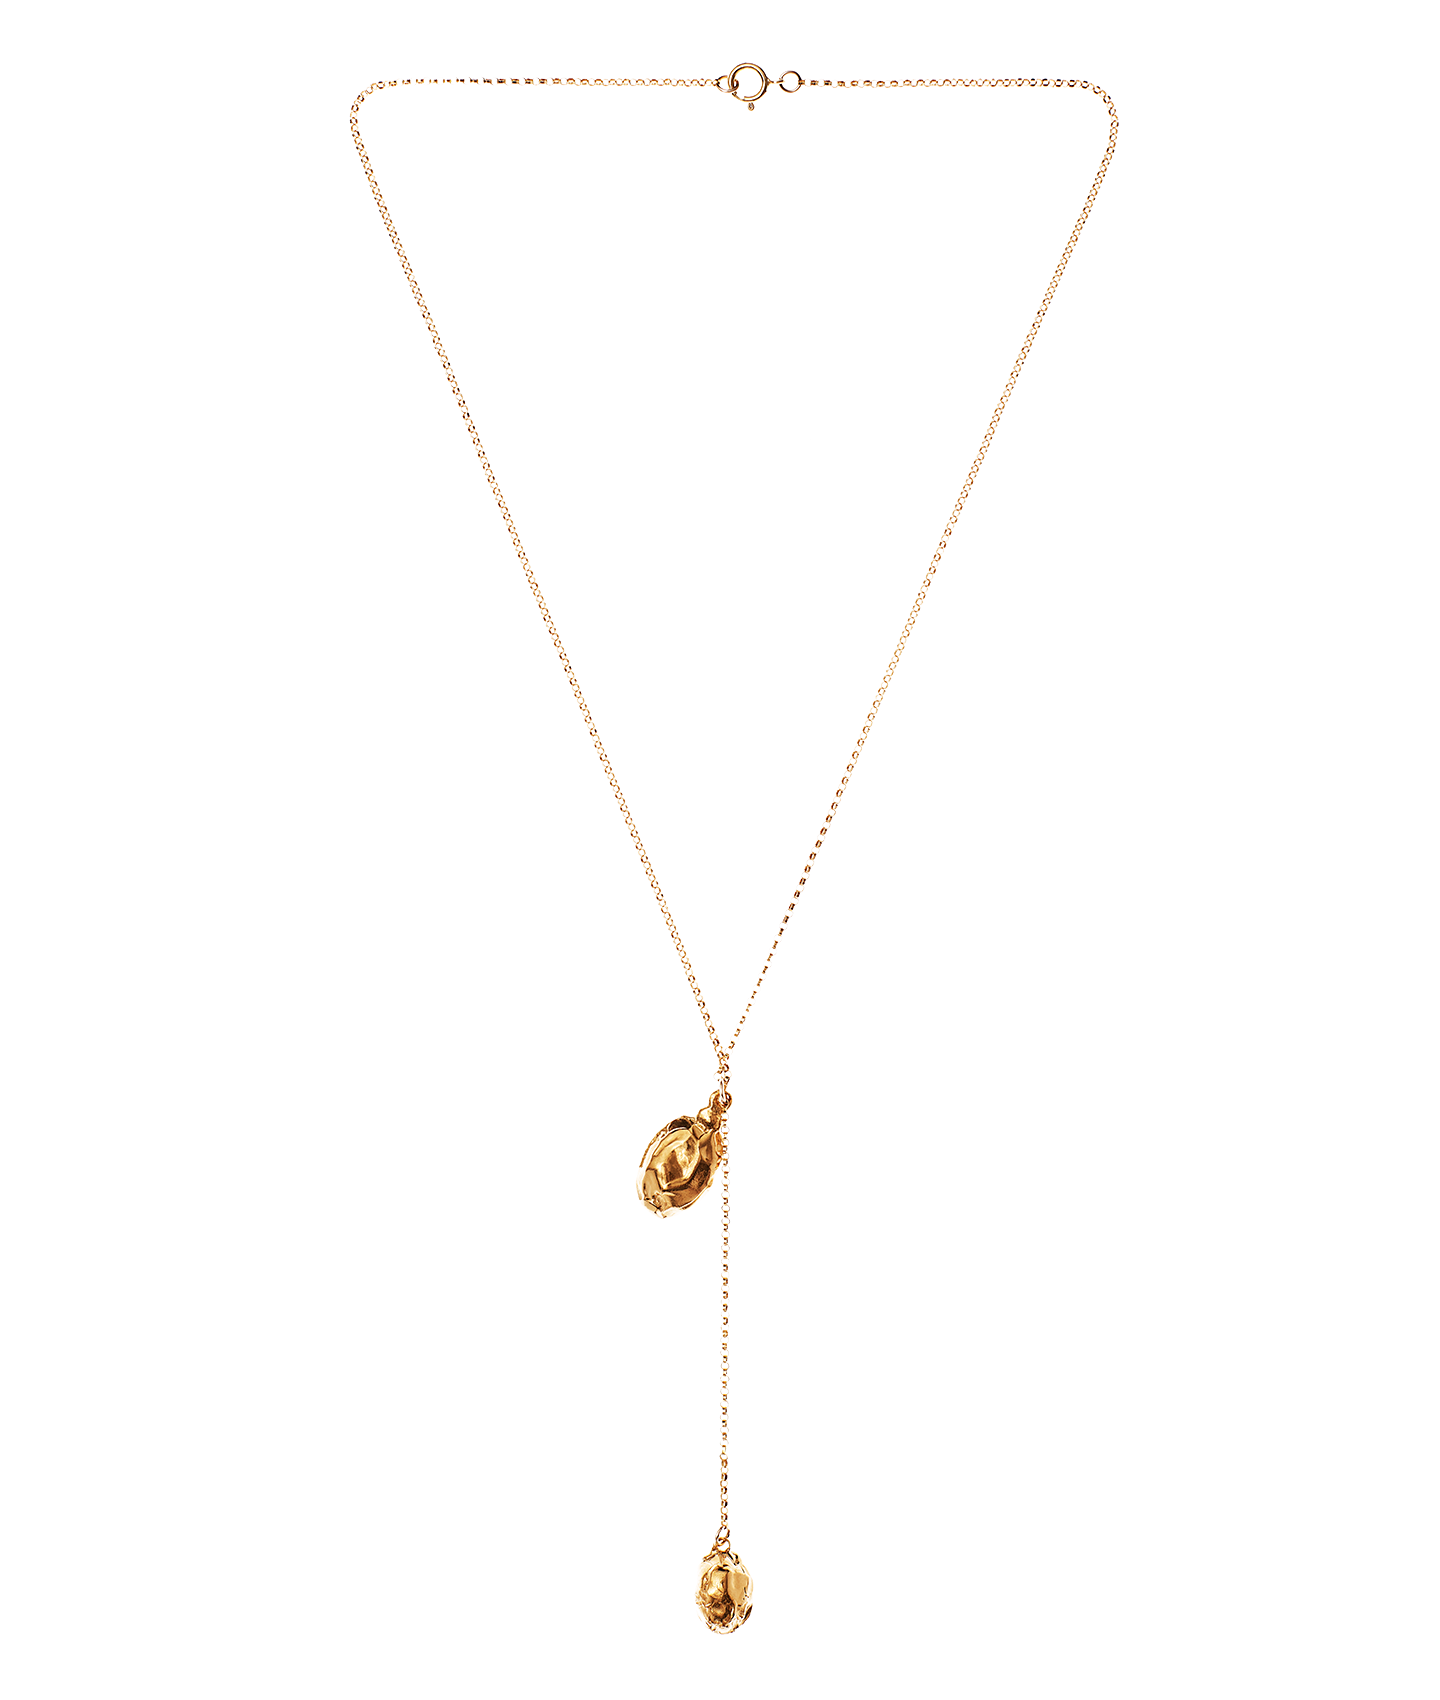 The Lunar Rocks Necklace | 24K Gold-Plated Lariat Pendant | Alighieri